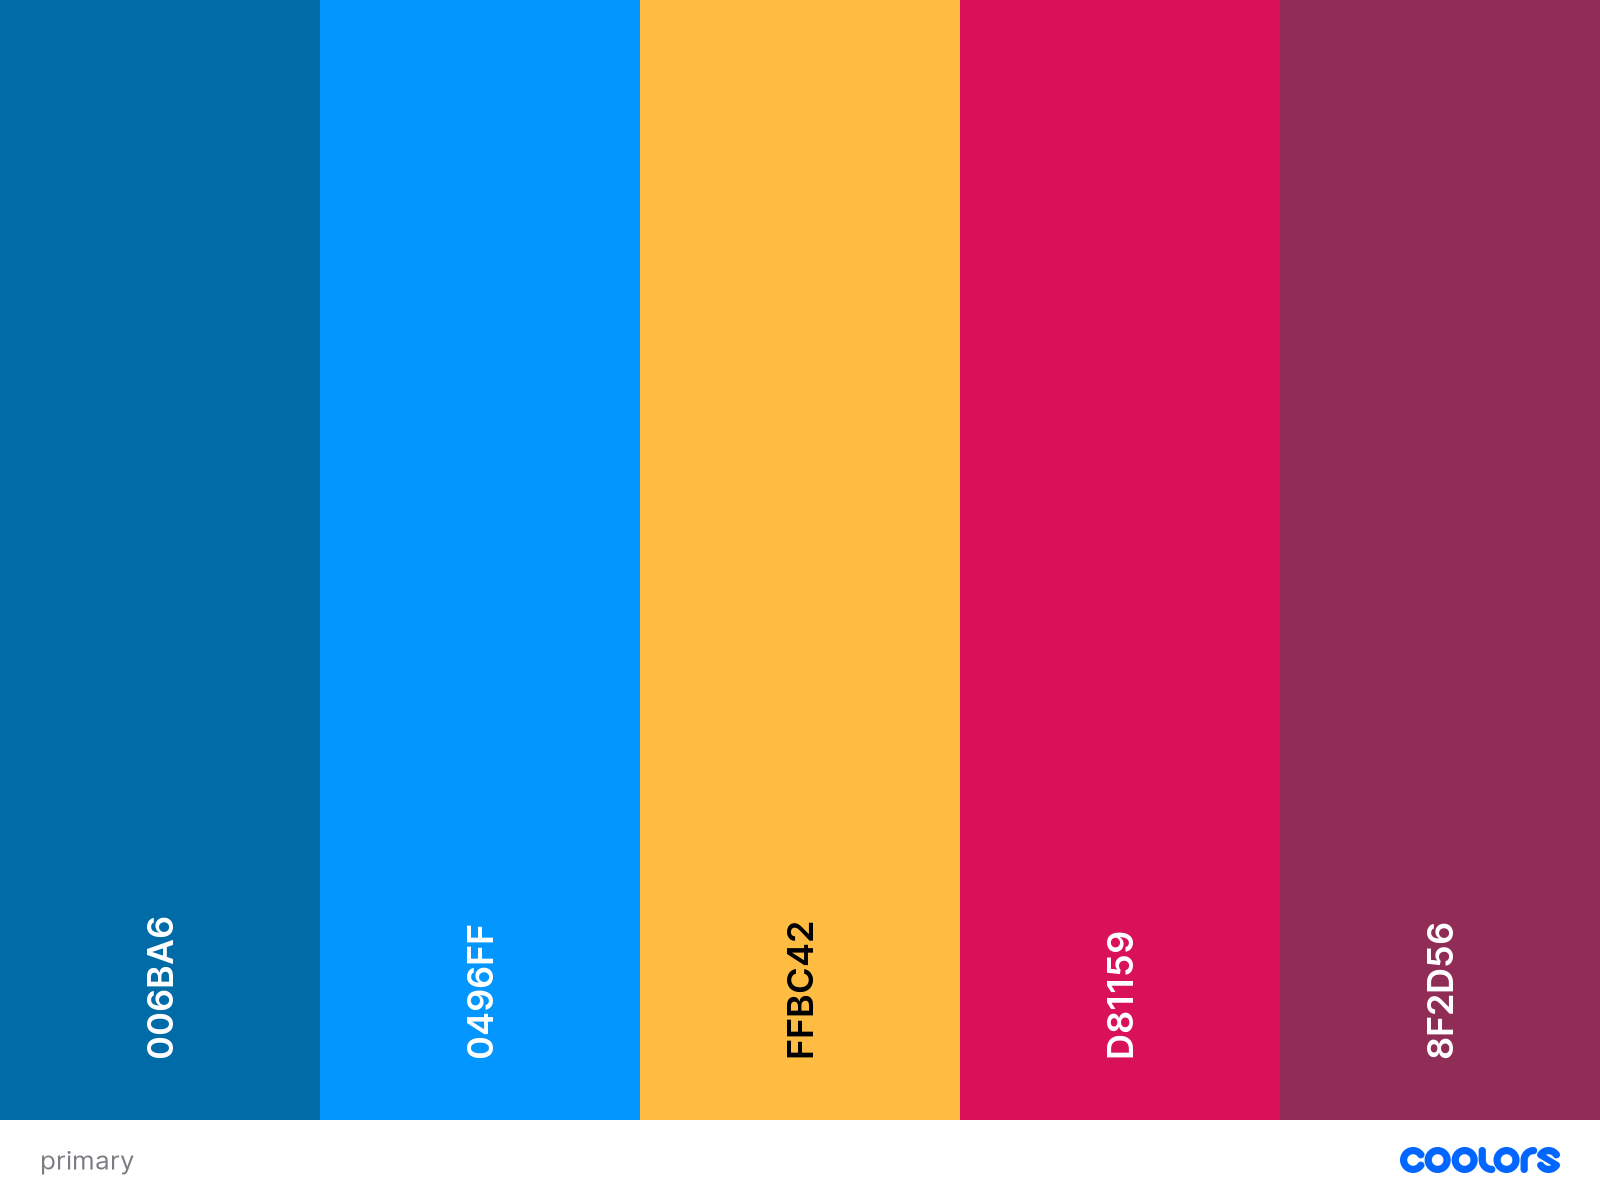 23 Color Palette Ideas To Inspire Your Next Graphic Design Project